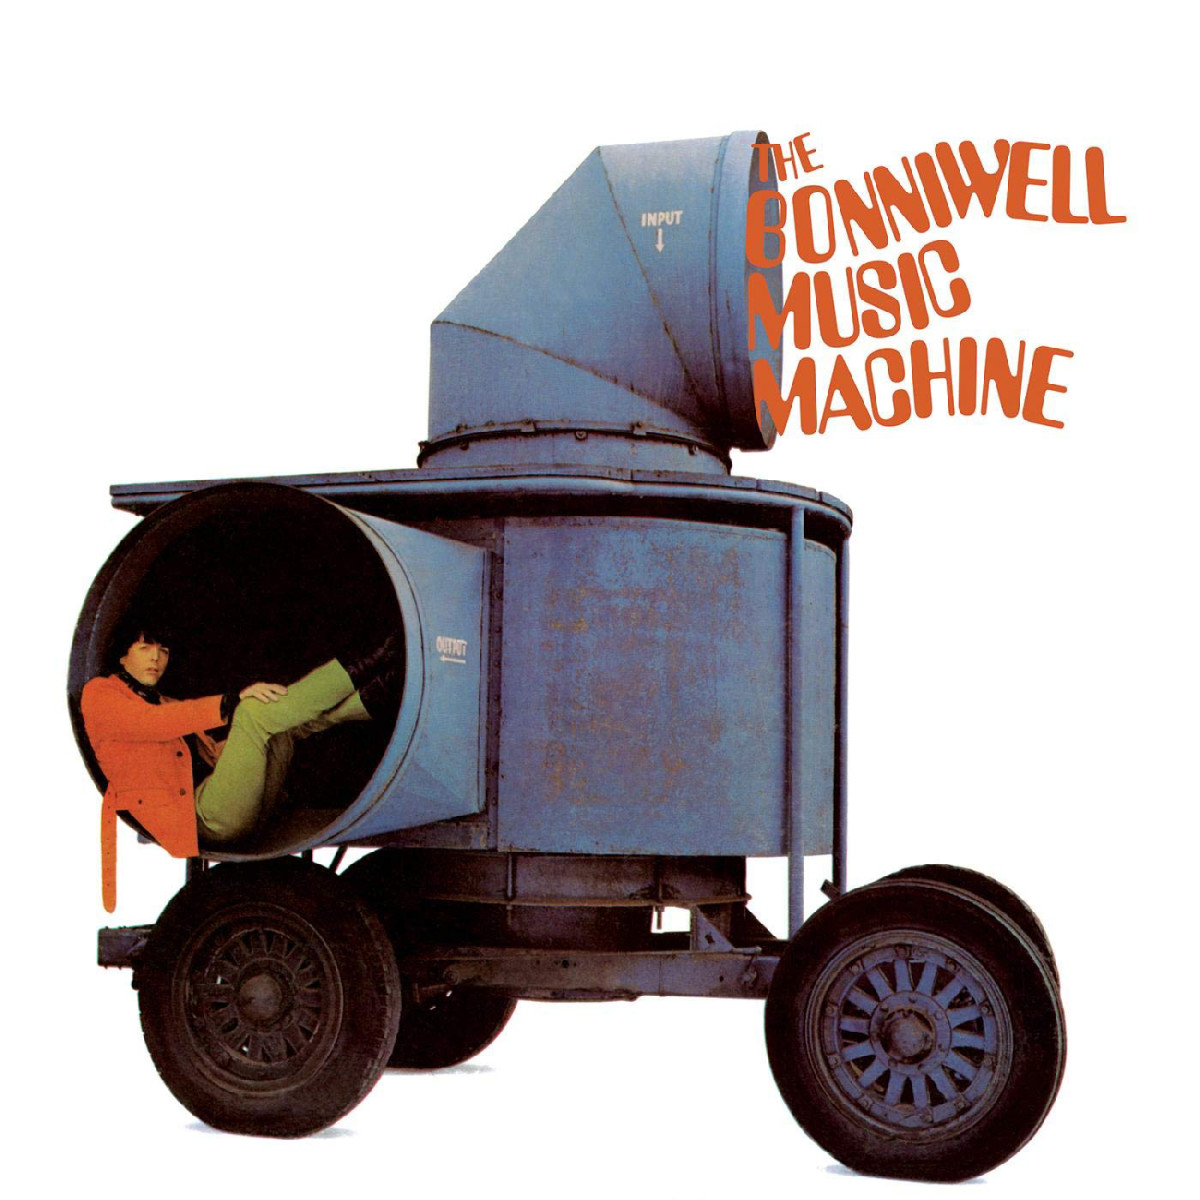 Bonniwell Music Machine